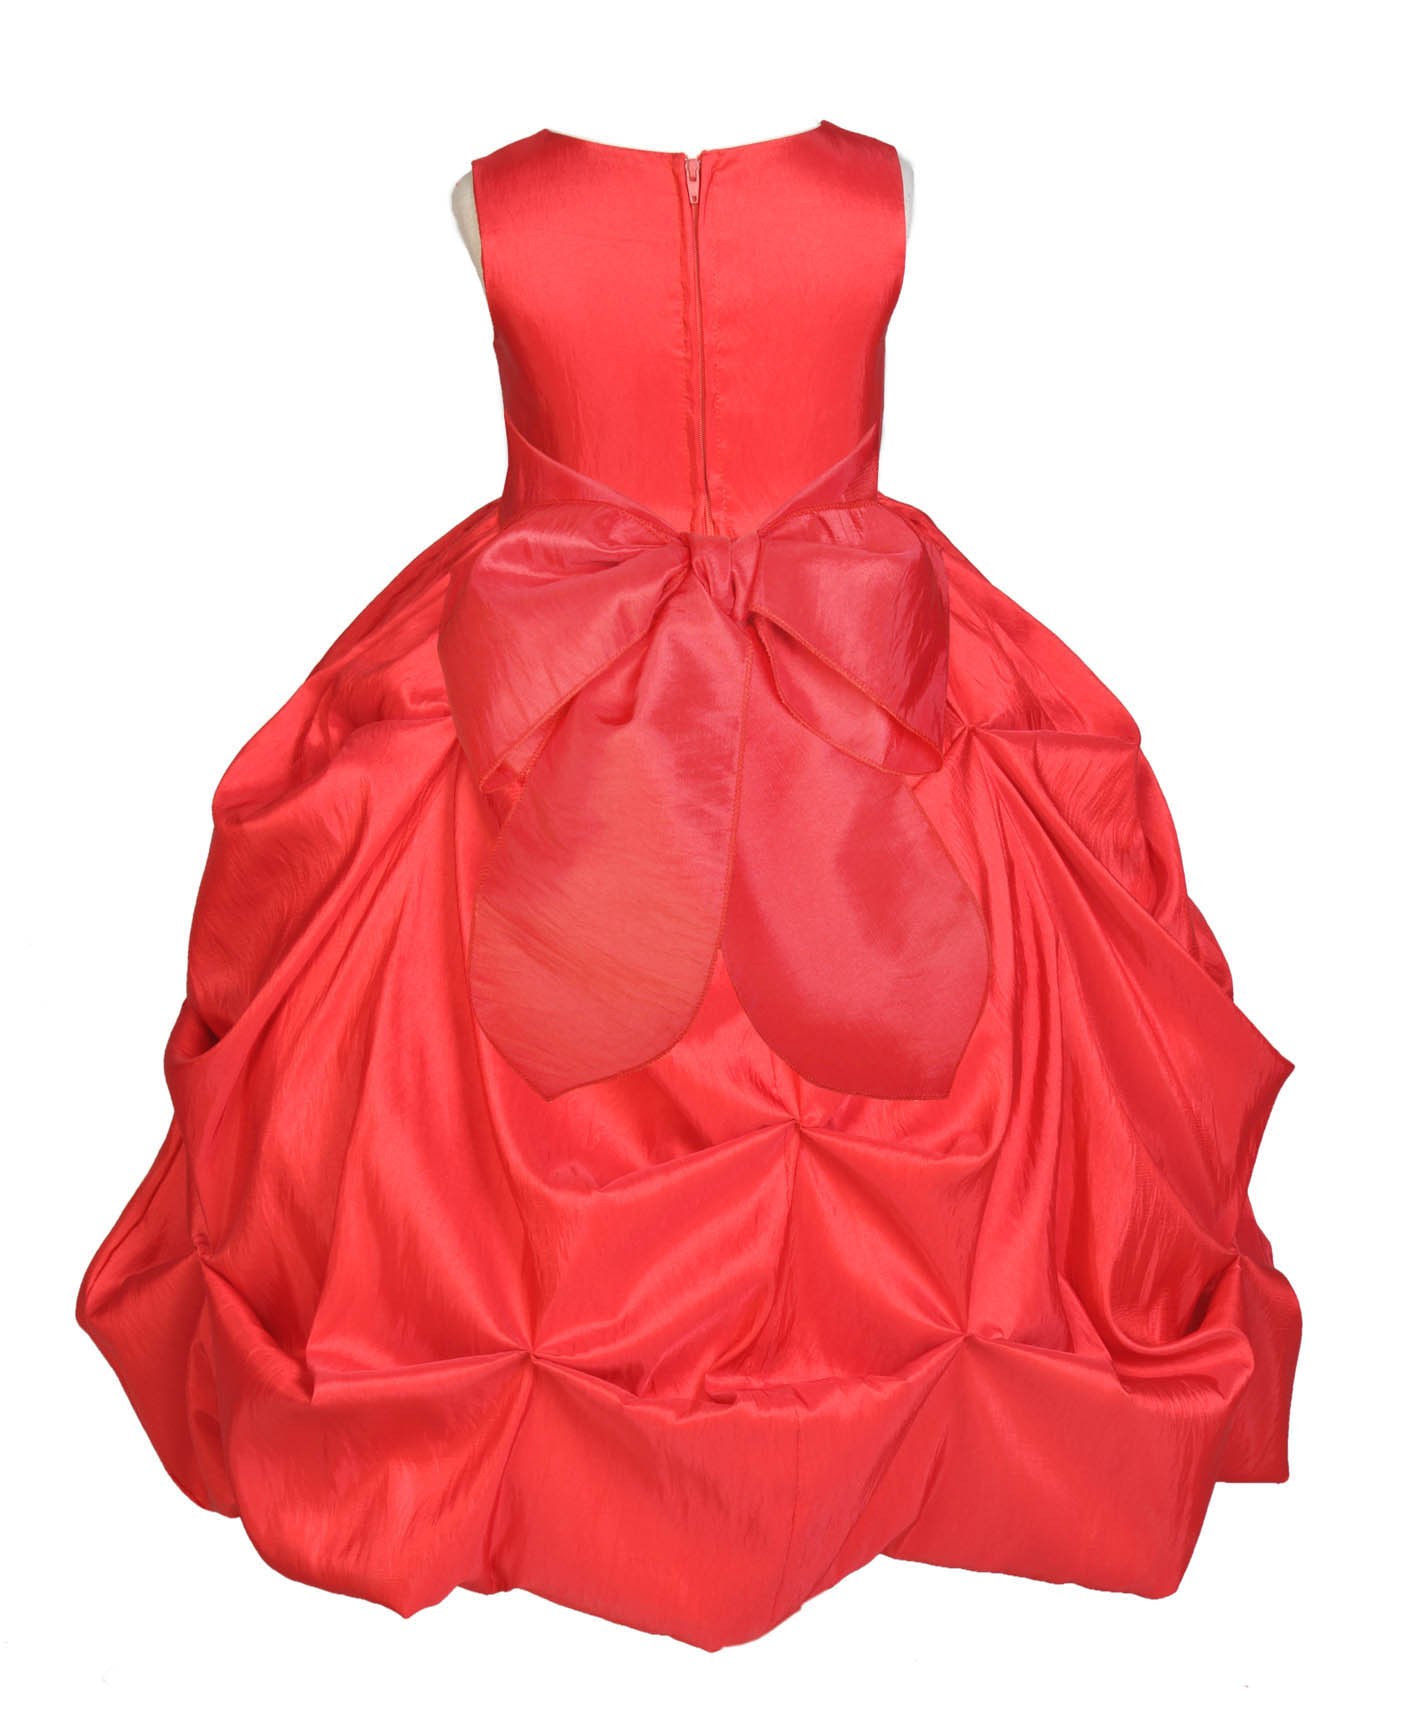 Matching Red Satin Taffeta Pick-Up Bubble Flower Girl Dress 301S